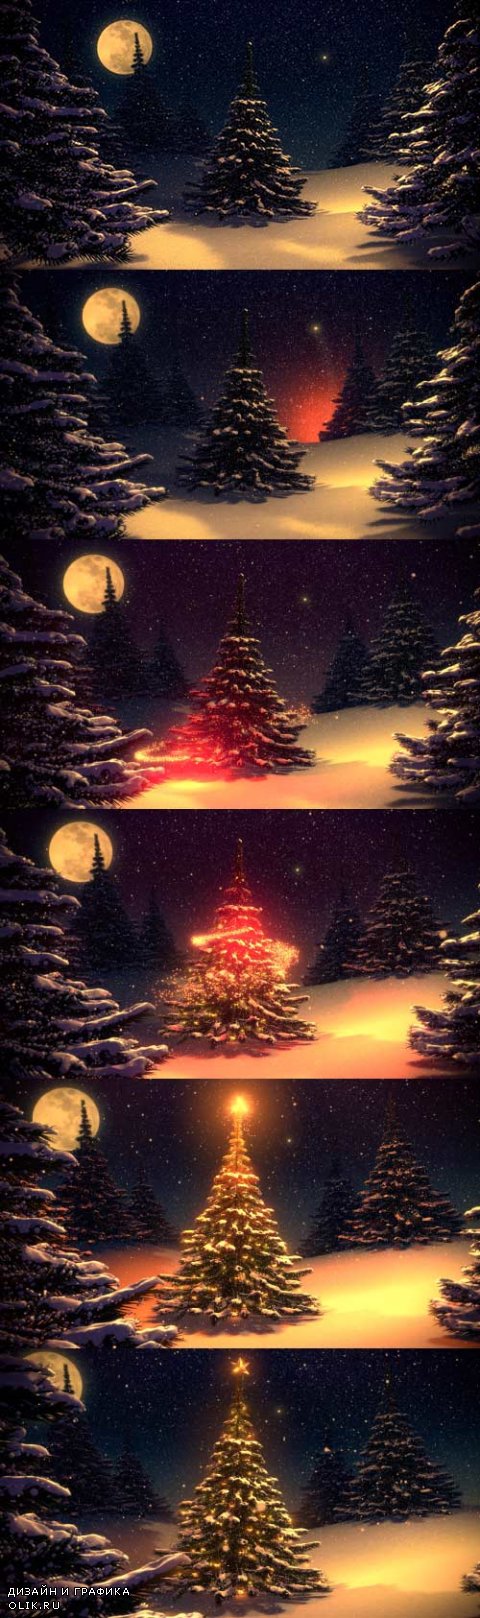 Illuminated Christmas star on the tree - 2